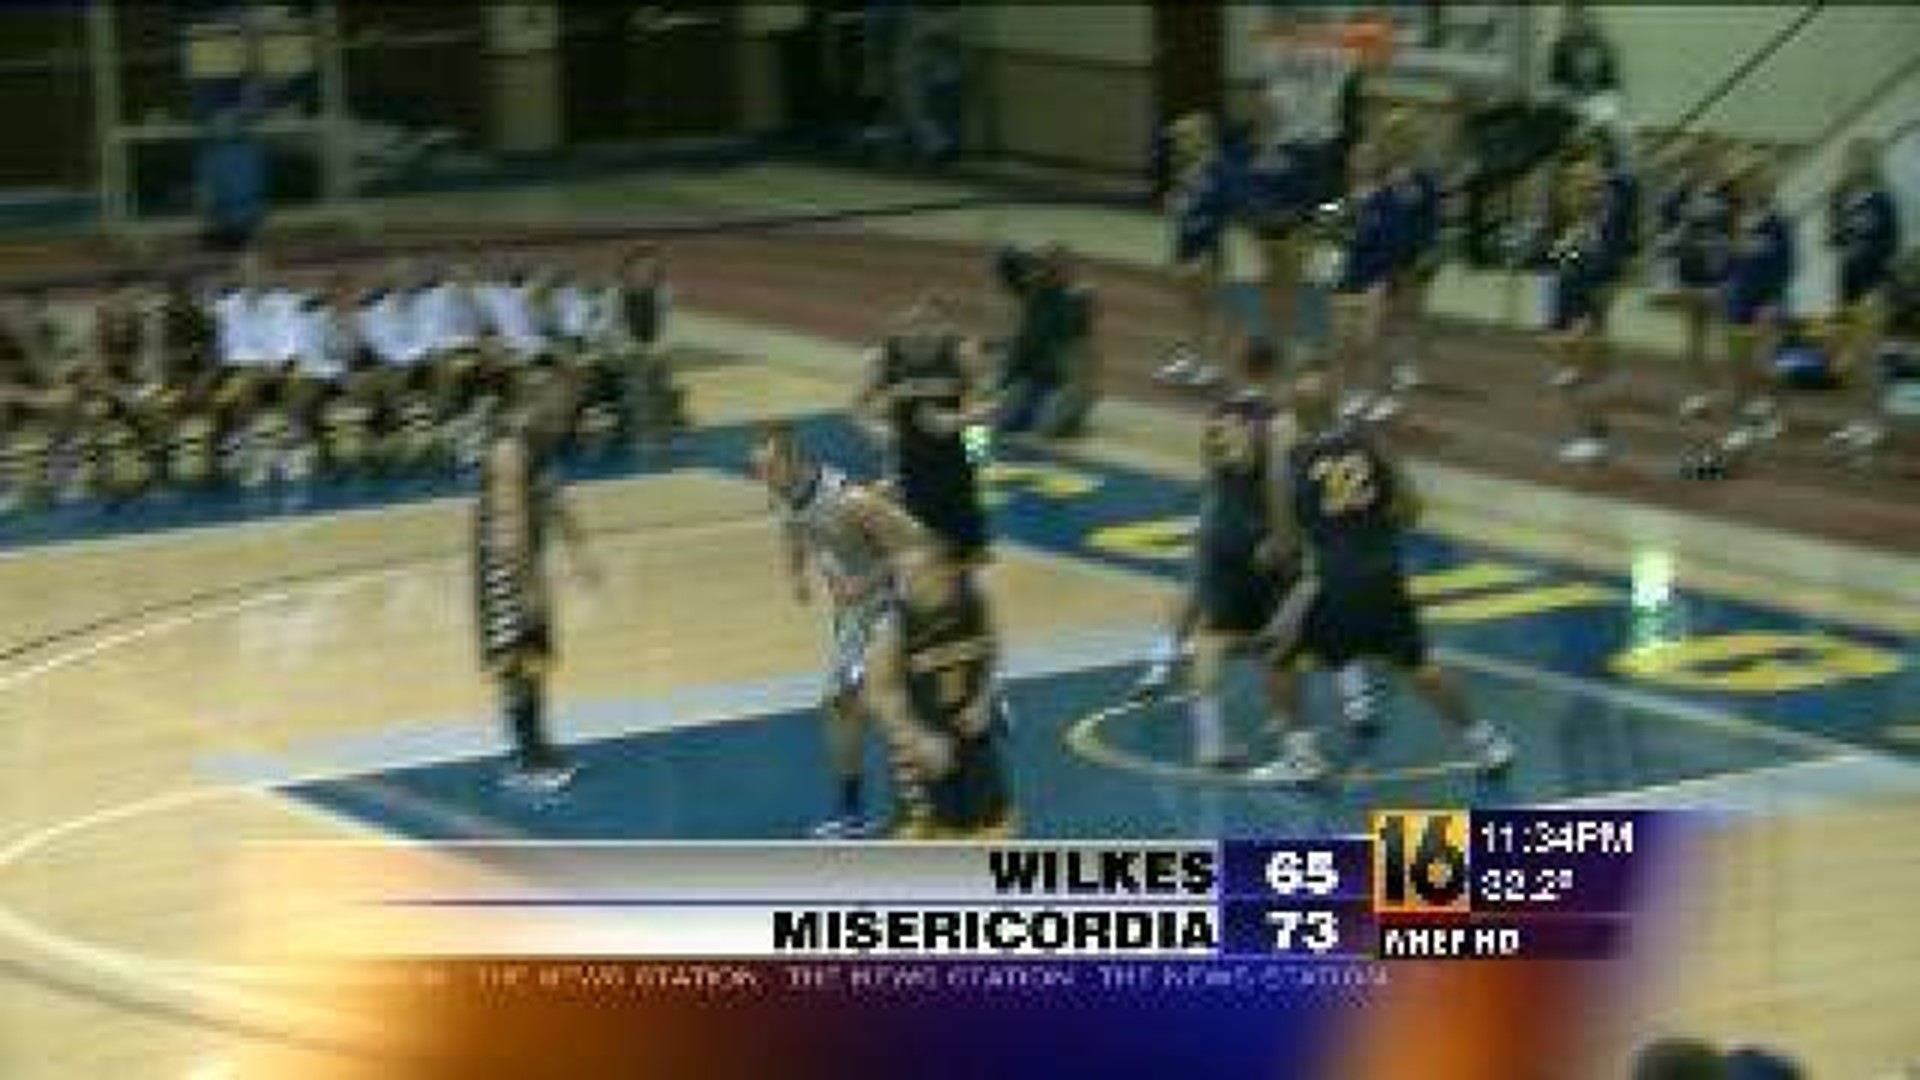 Misericordia vs Wilkes Basketball